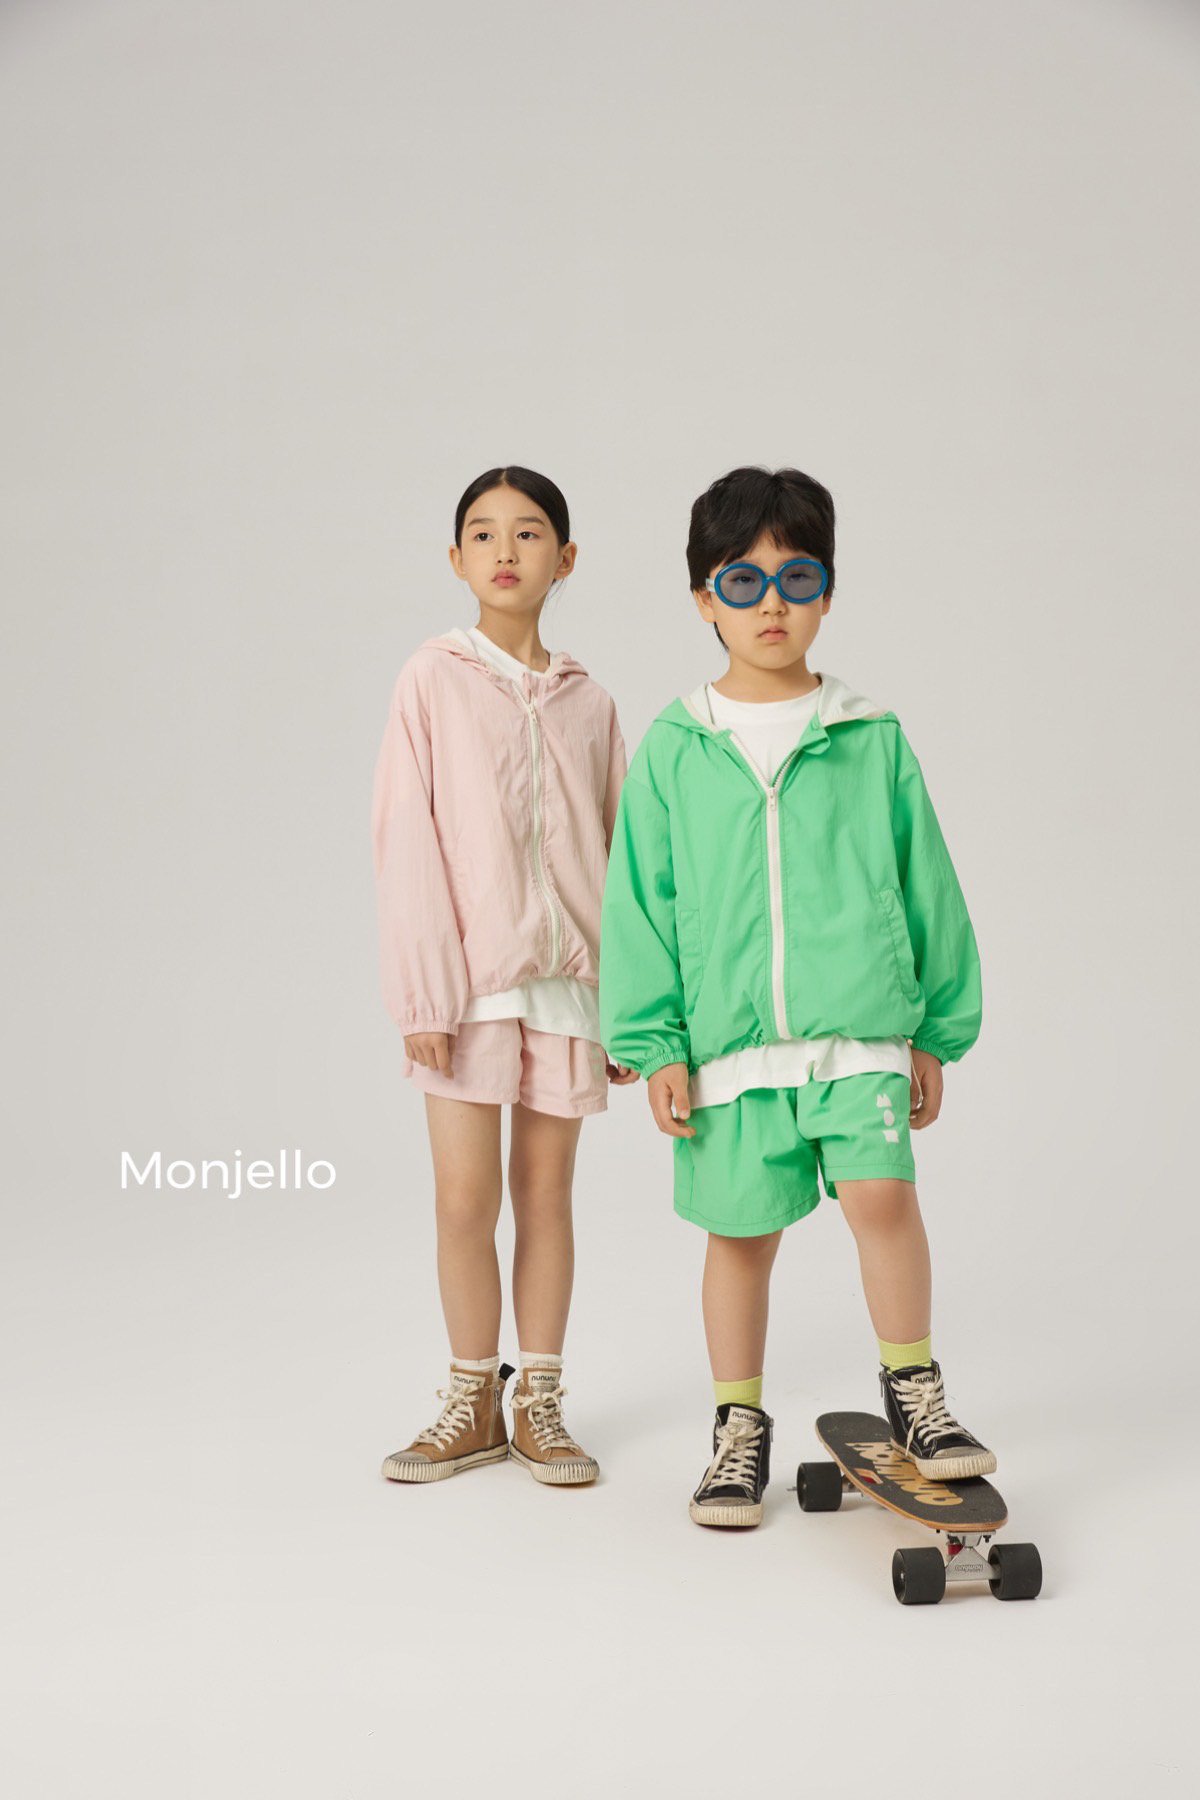 Monjello 2023 Summer 올여름 몽젤로의 편안한 매력빠져보세요    마카롱 UV바람막이 상하세트  -color  연그린(Light green), 연핑크(Light pink)   -size S,M,L,XL,JS,JM (90~140)